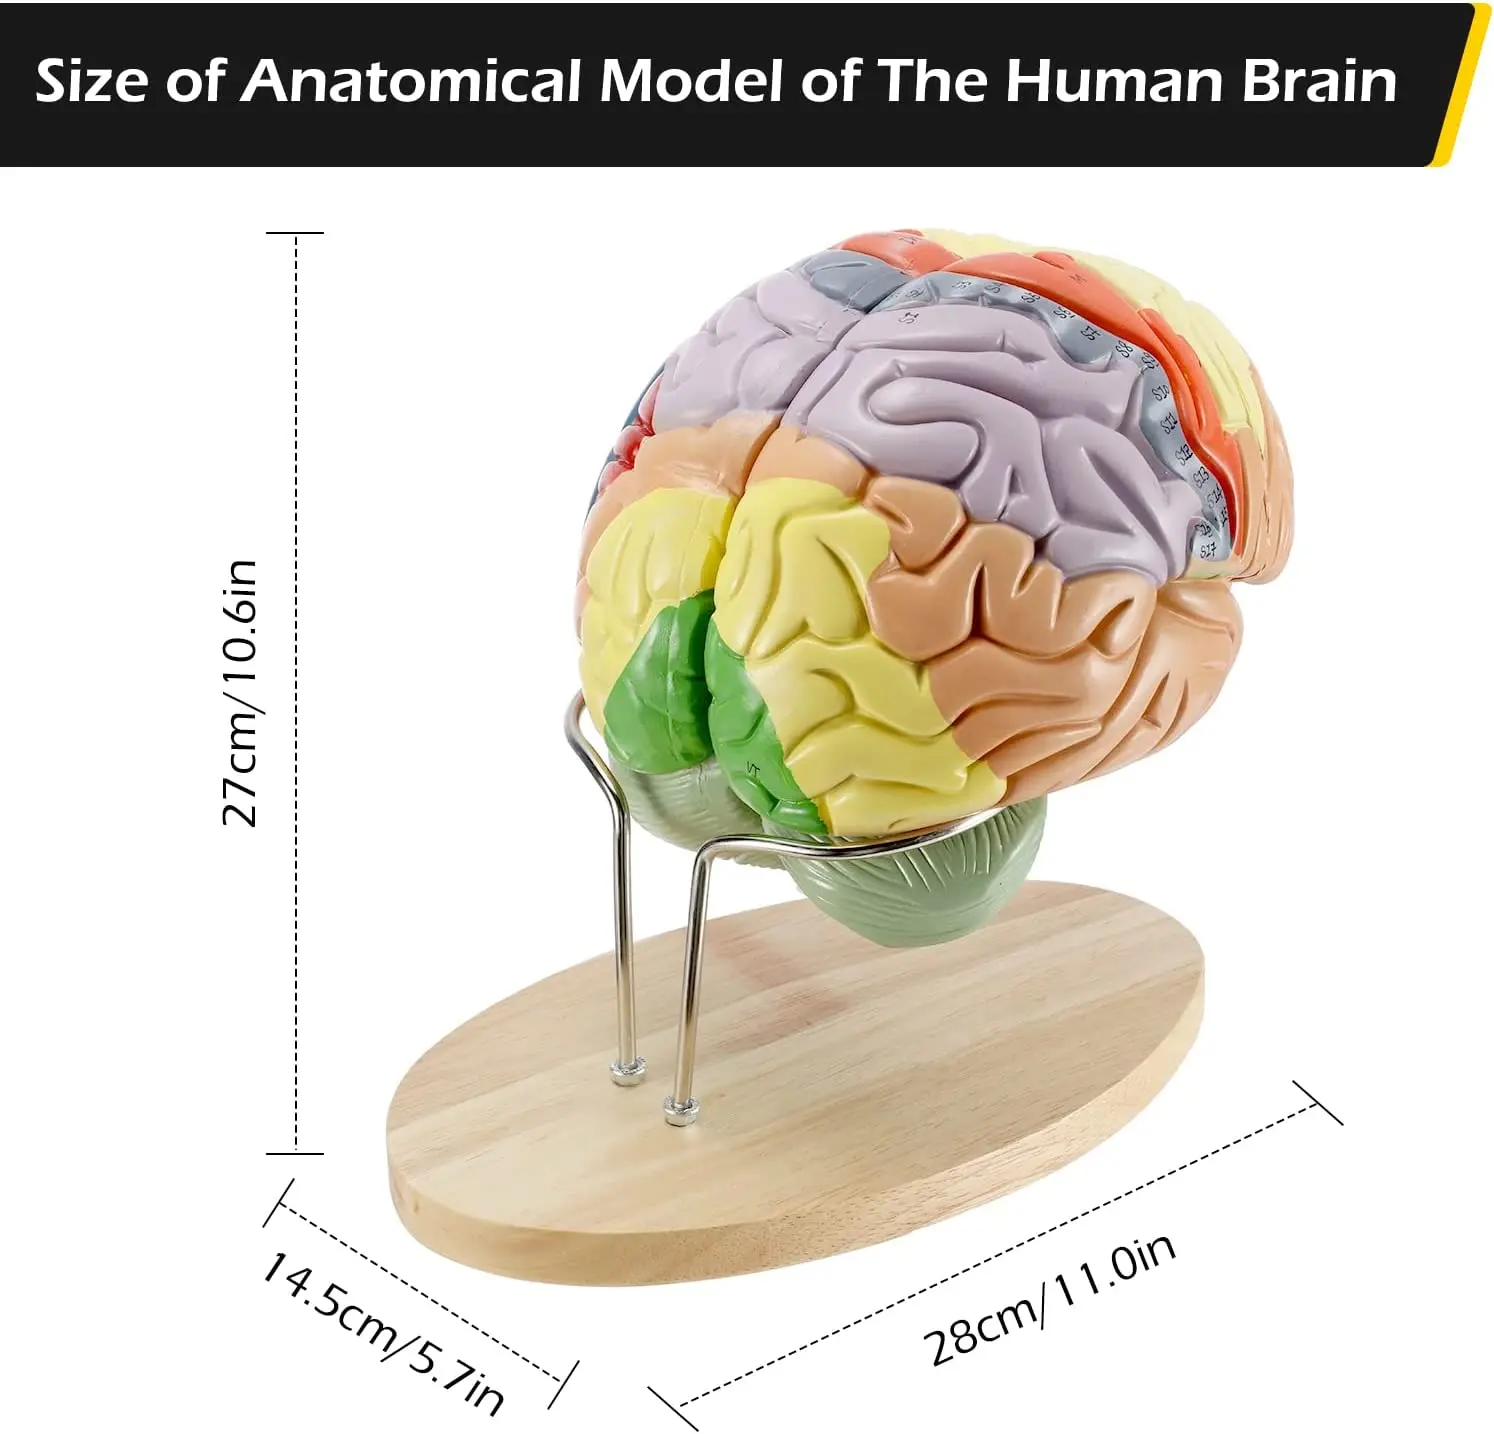 Human Brain Model Anatomy 2x Life Size Human Brain Anatomical Model For